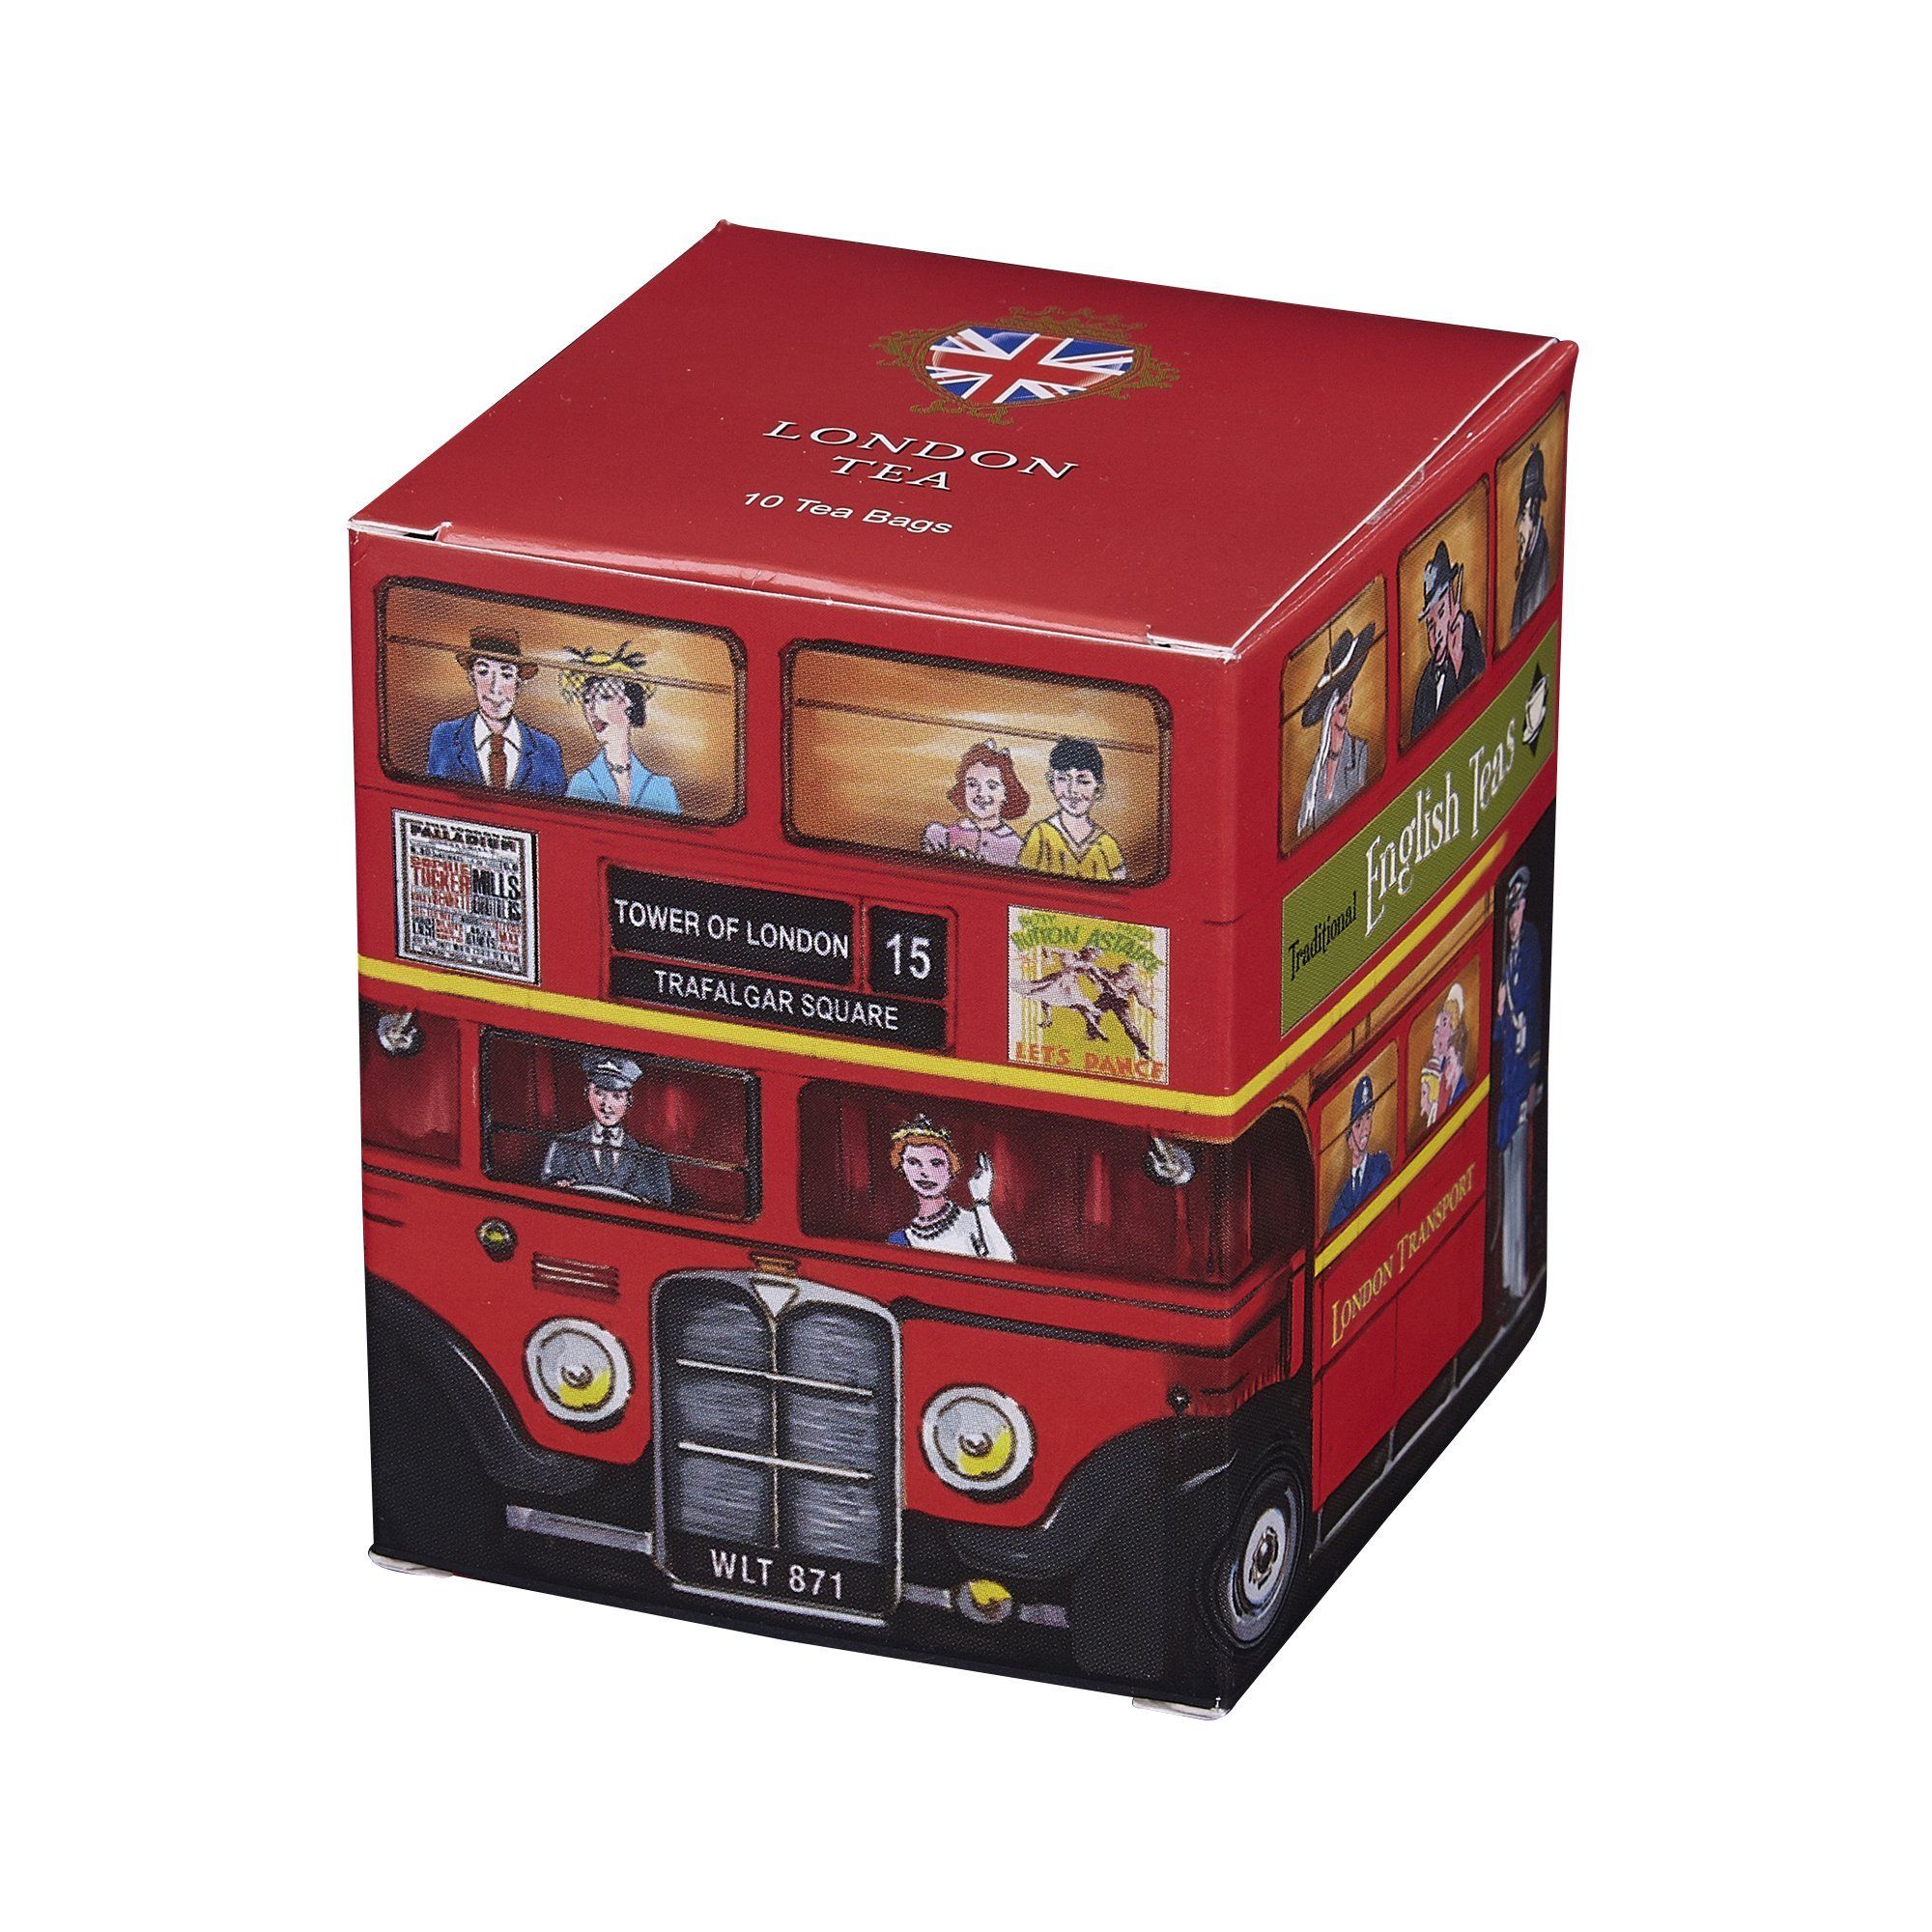 Red London Bus London Tea 10 Teabag Carton Black Tea New English Teas 